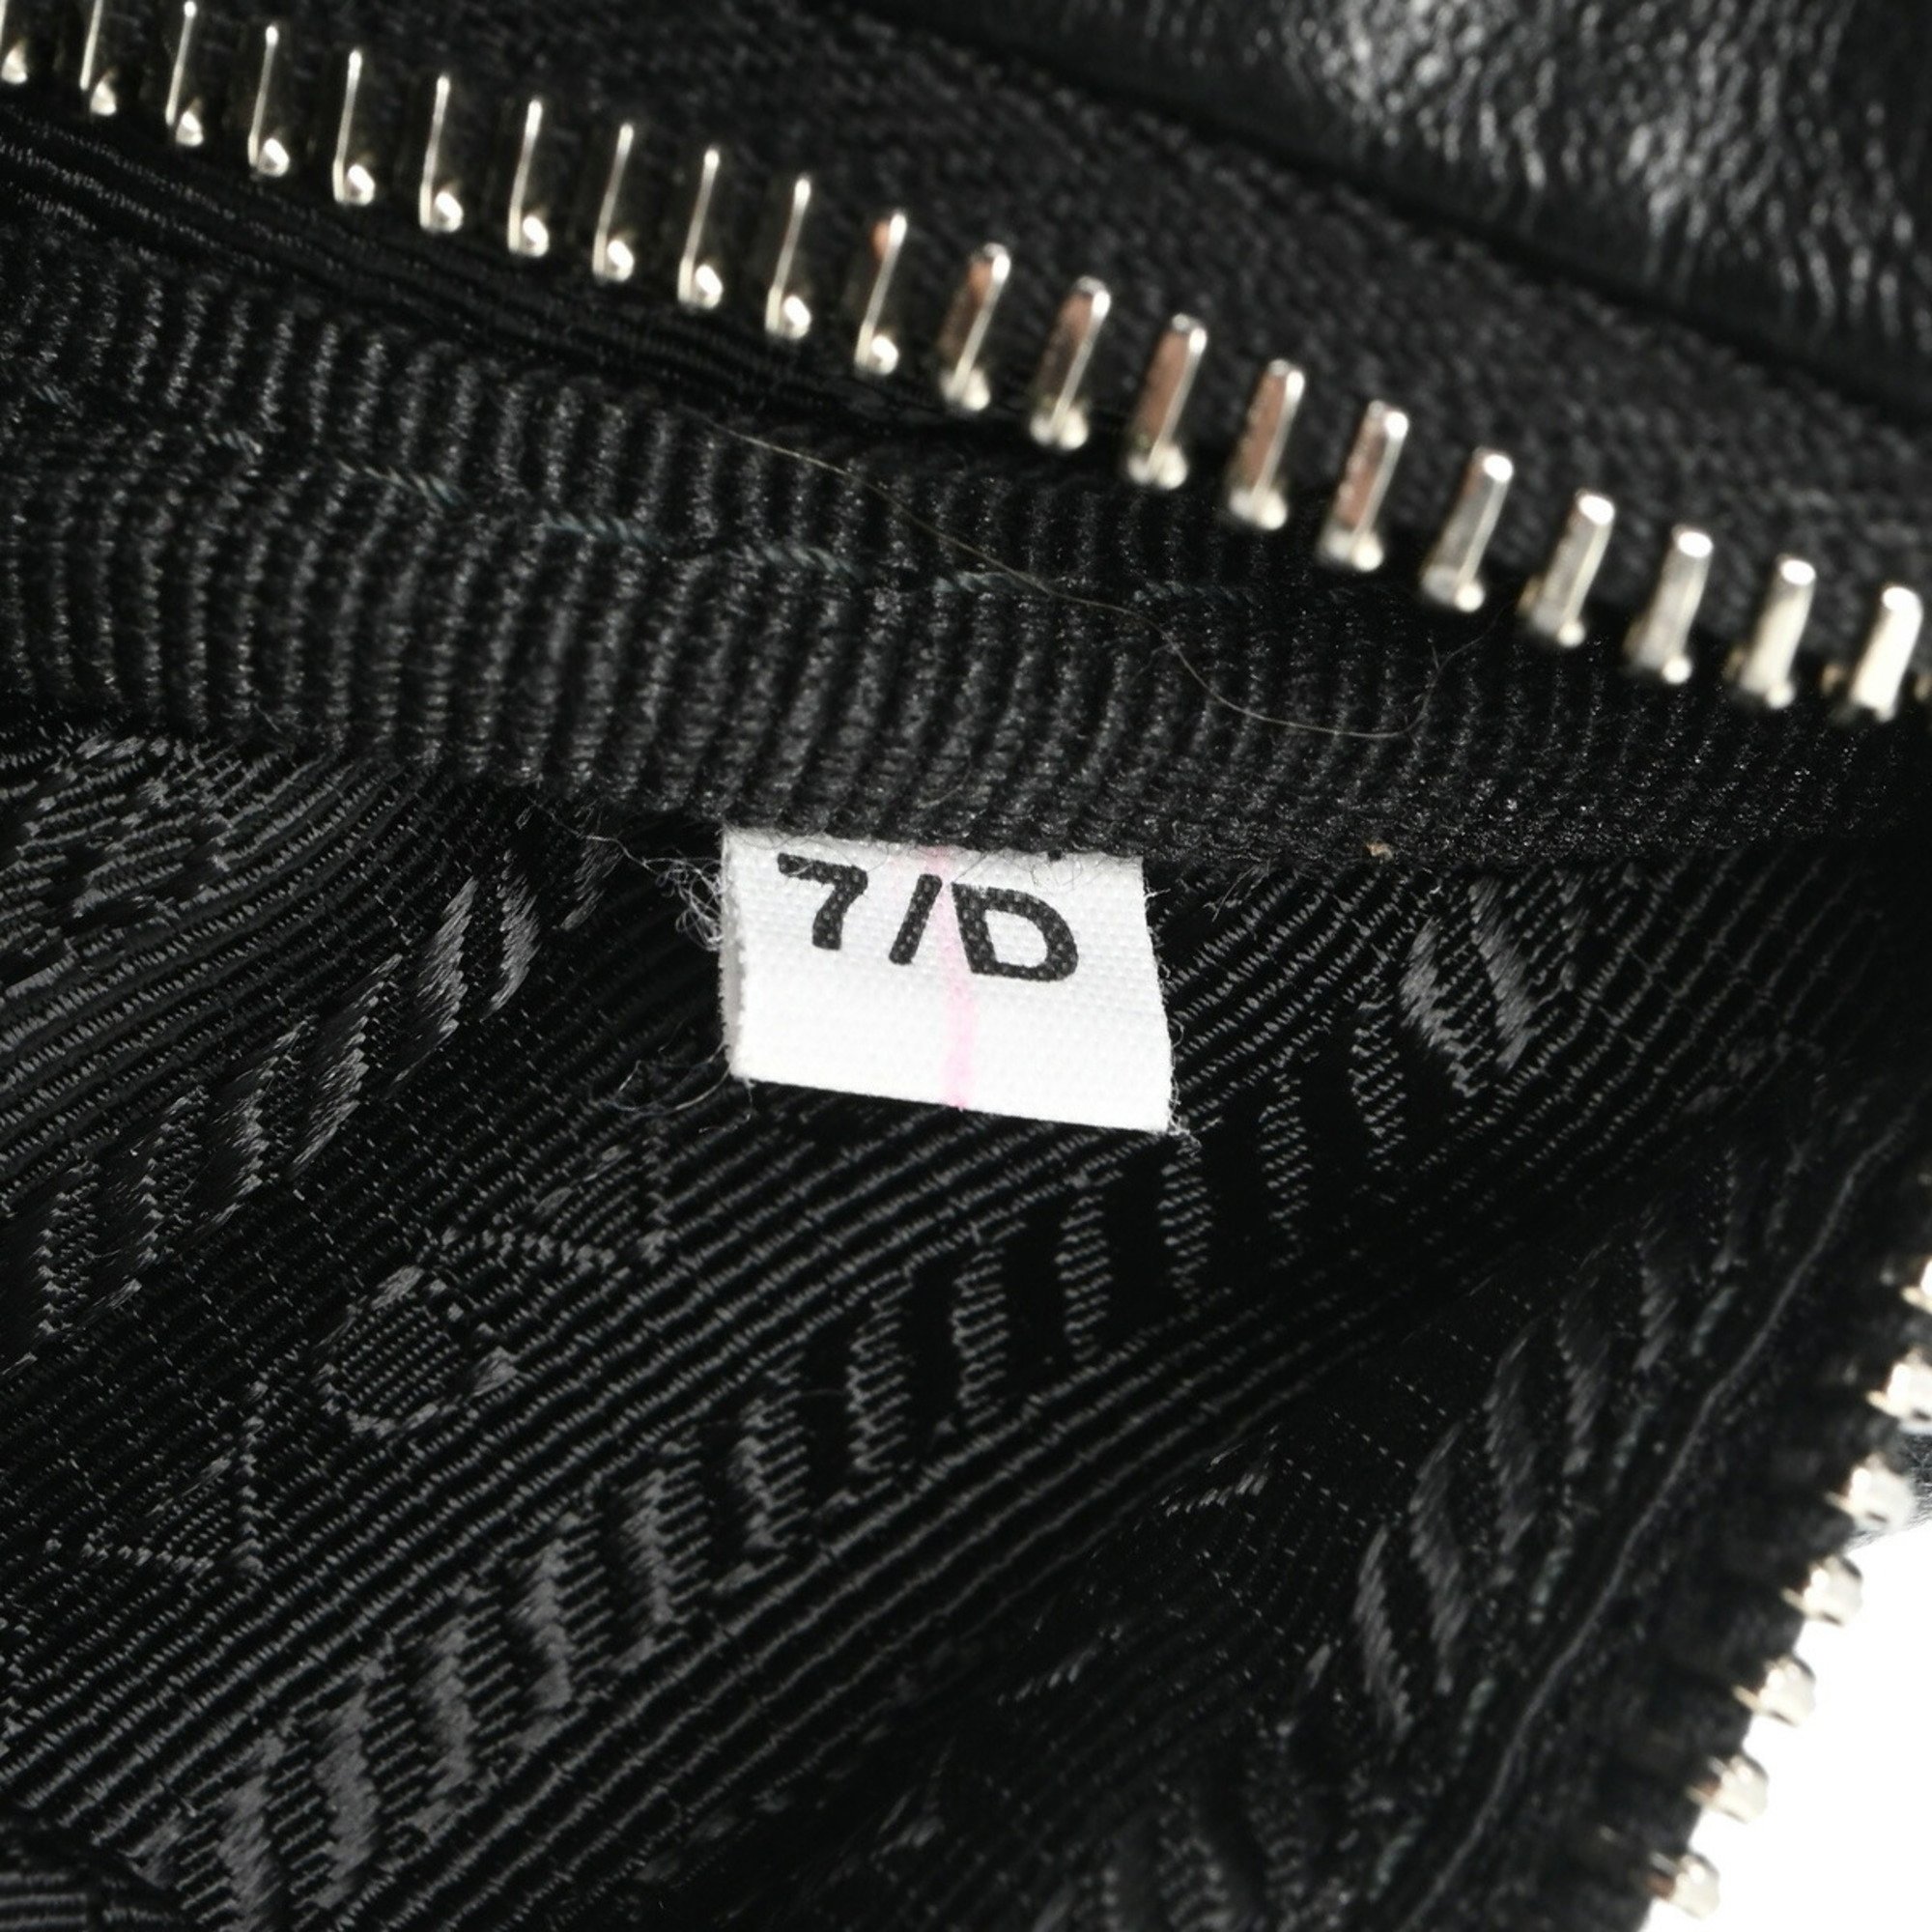 PRADA Prada Triangle Black Women's Leather Shoulder Bag